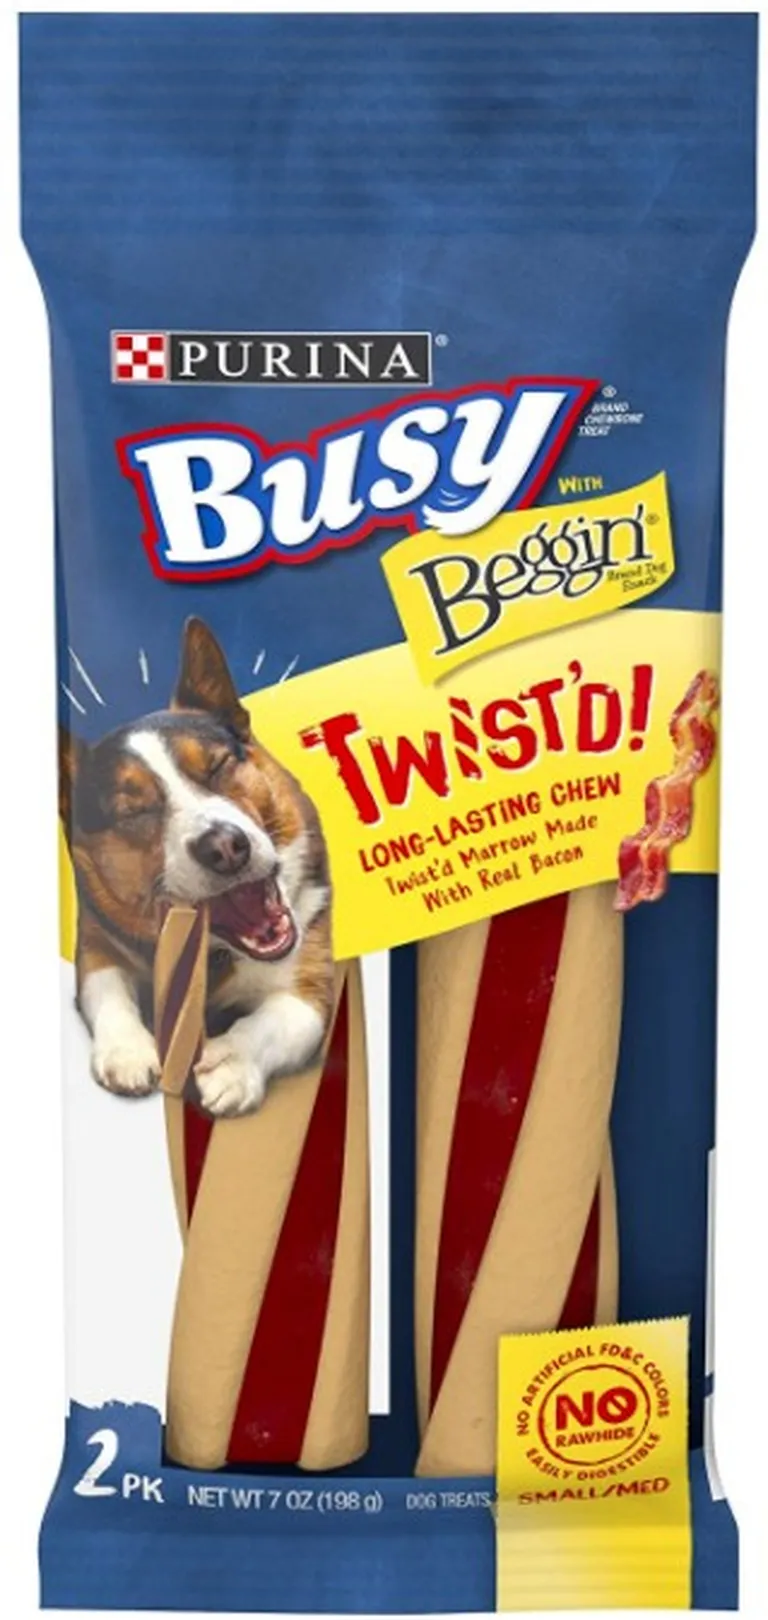 Purina Busy with Beggin' Twist'd Chew Treats Original Photo 1